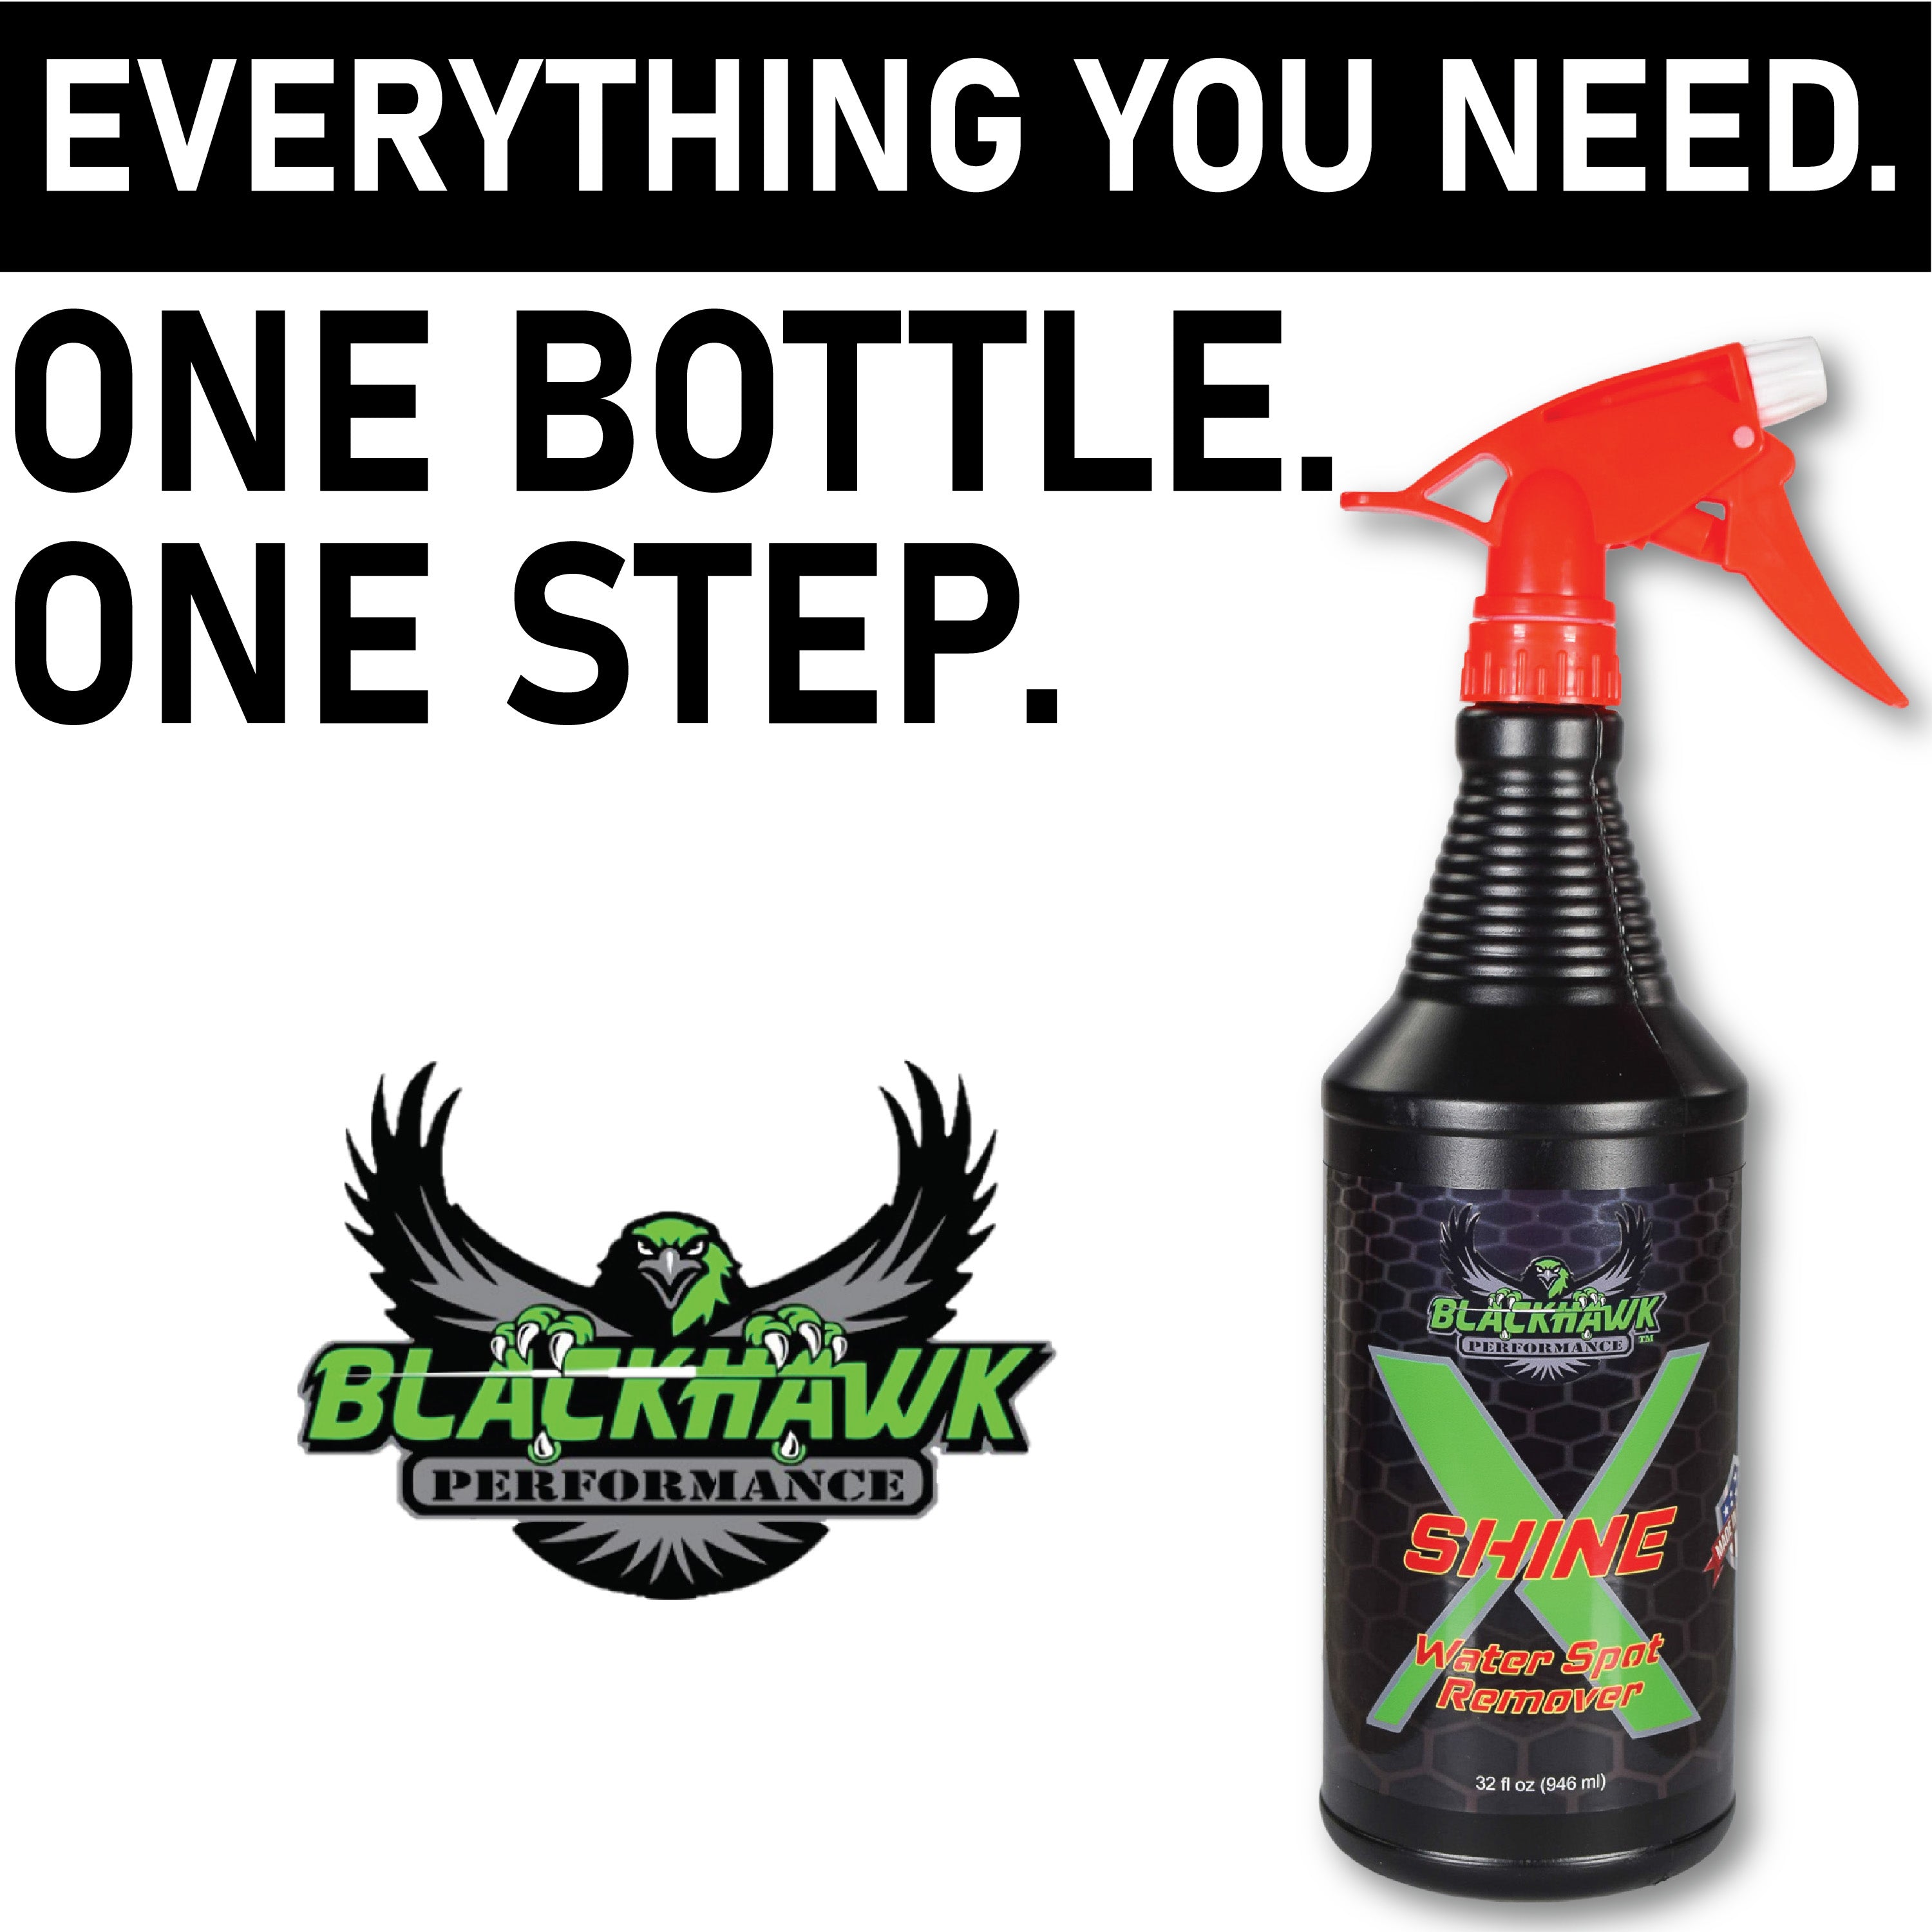 Blackhawk Performance Shine X Streak Free Water Spot Remover Made in USA (32oz)